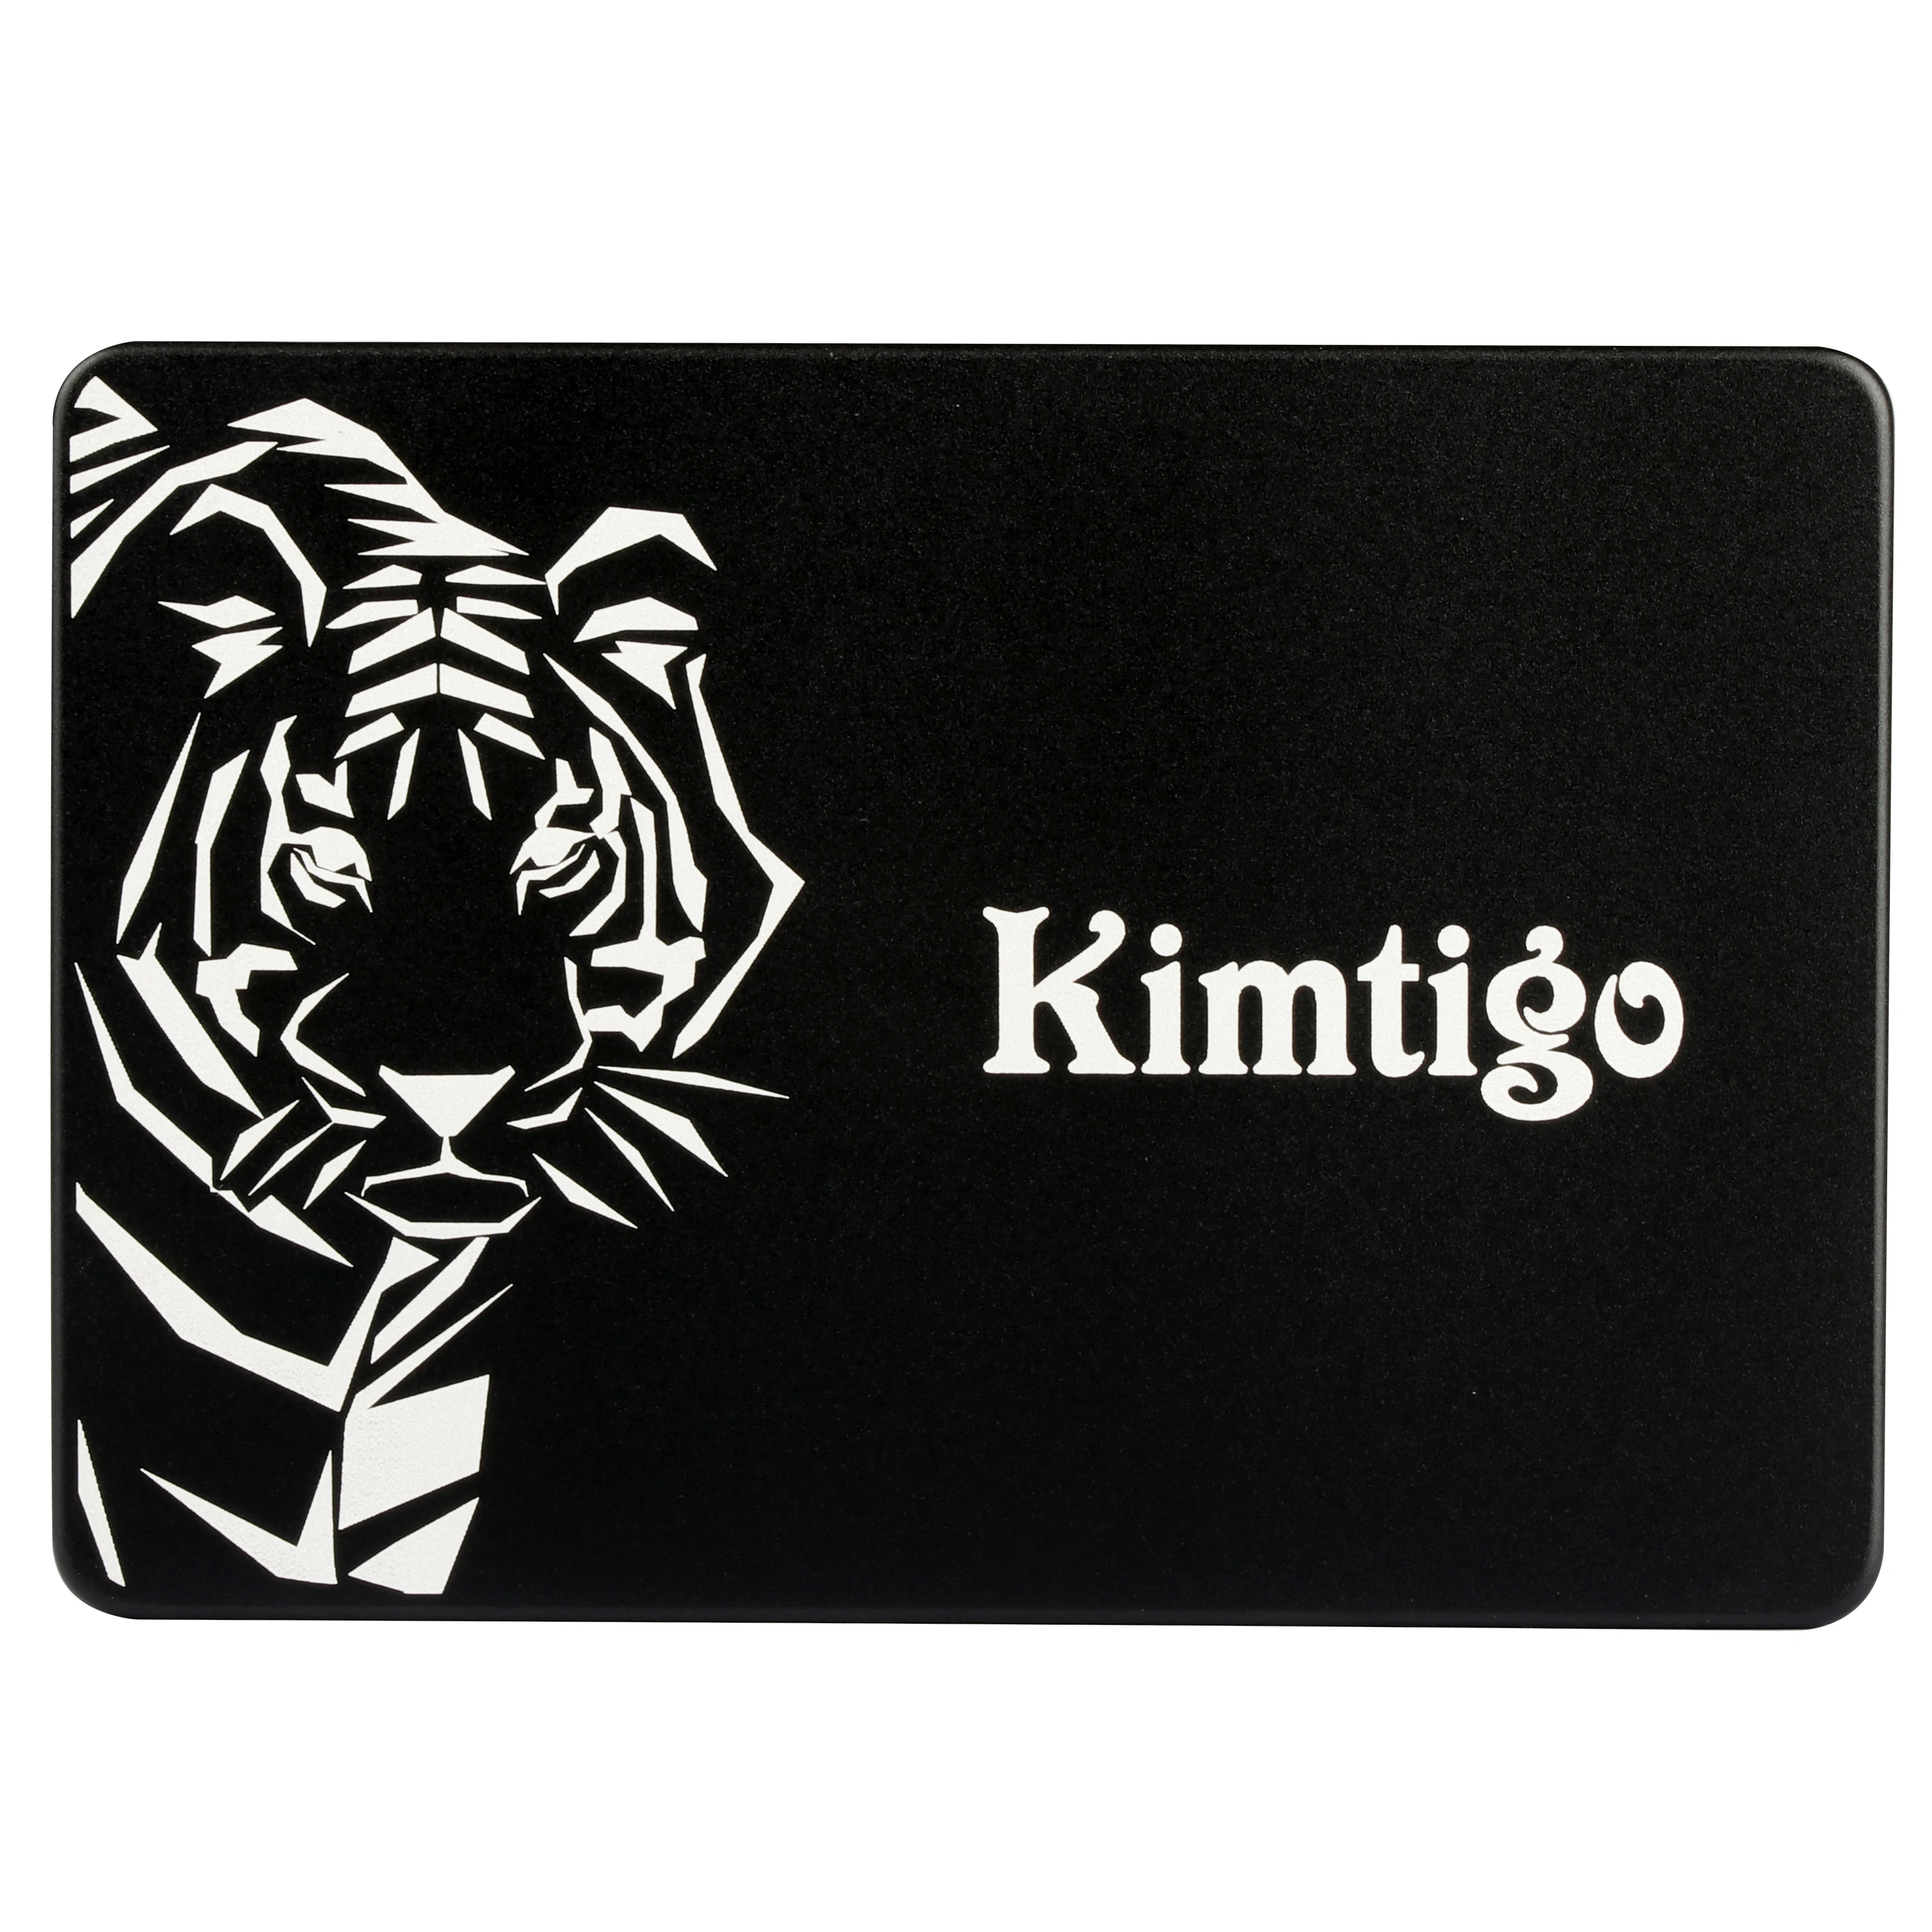 

Kimtigo factory high quality ssd memory SATA3 2.5inch ssd 120GB 240GB 480GB 960GB laptop desktop ssd, Black